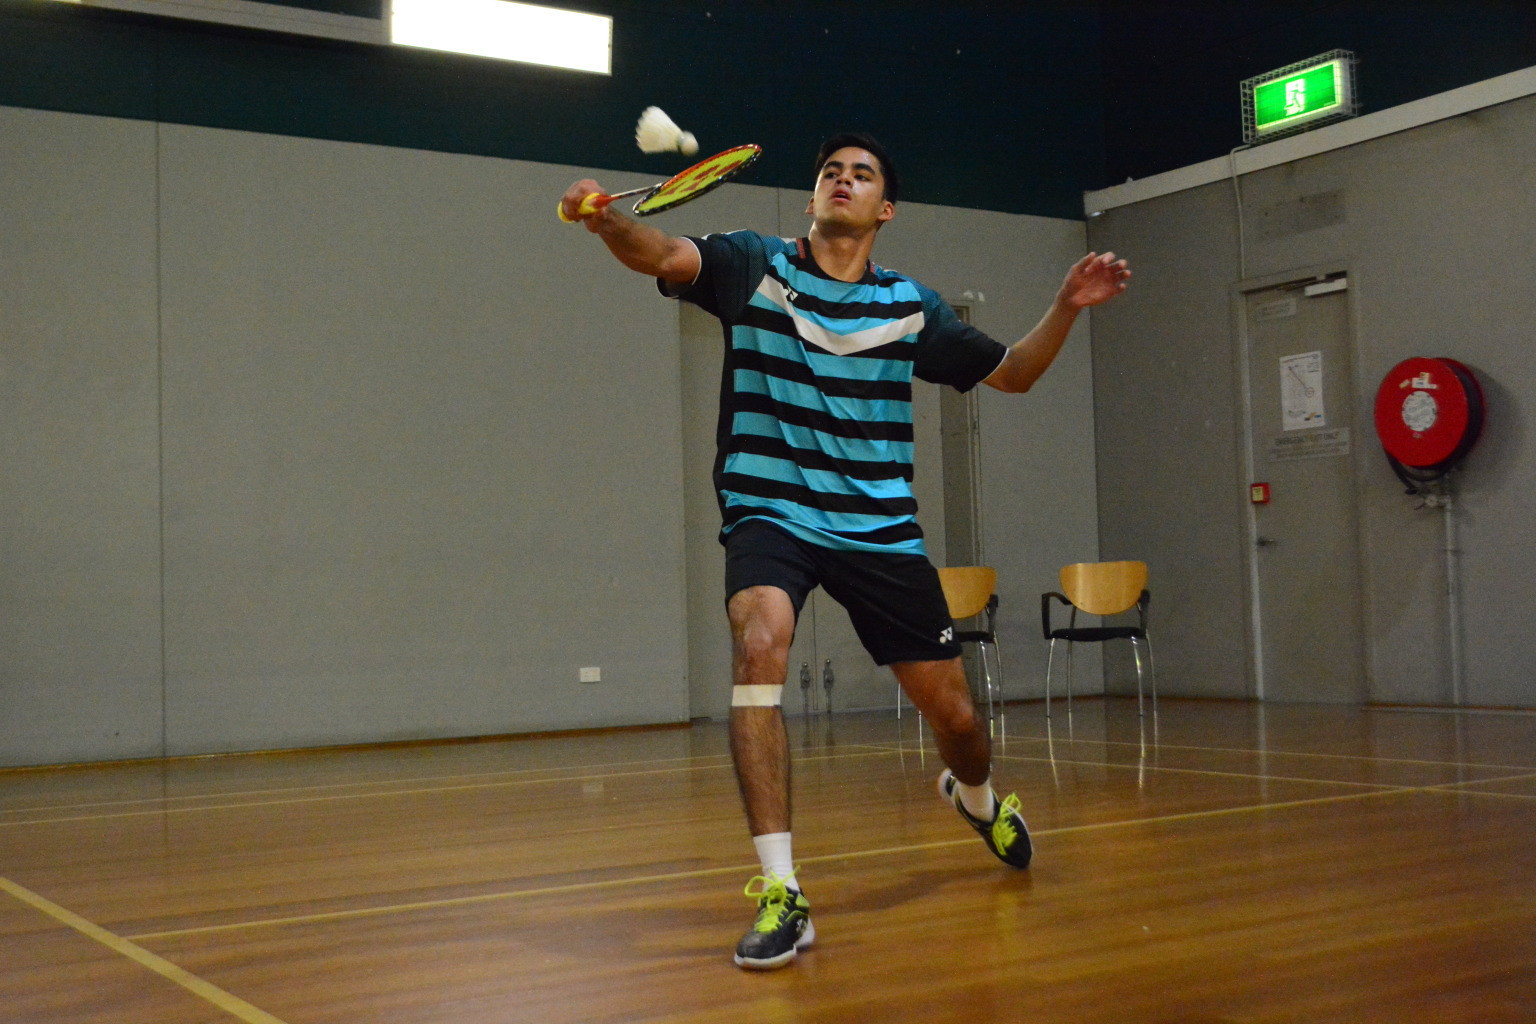 Top seed Manota cruises through to third round at Oceania Badminton Championships